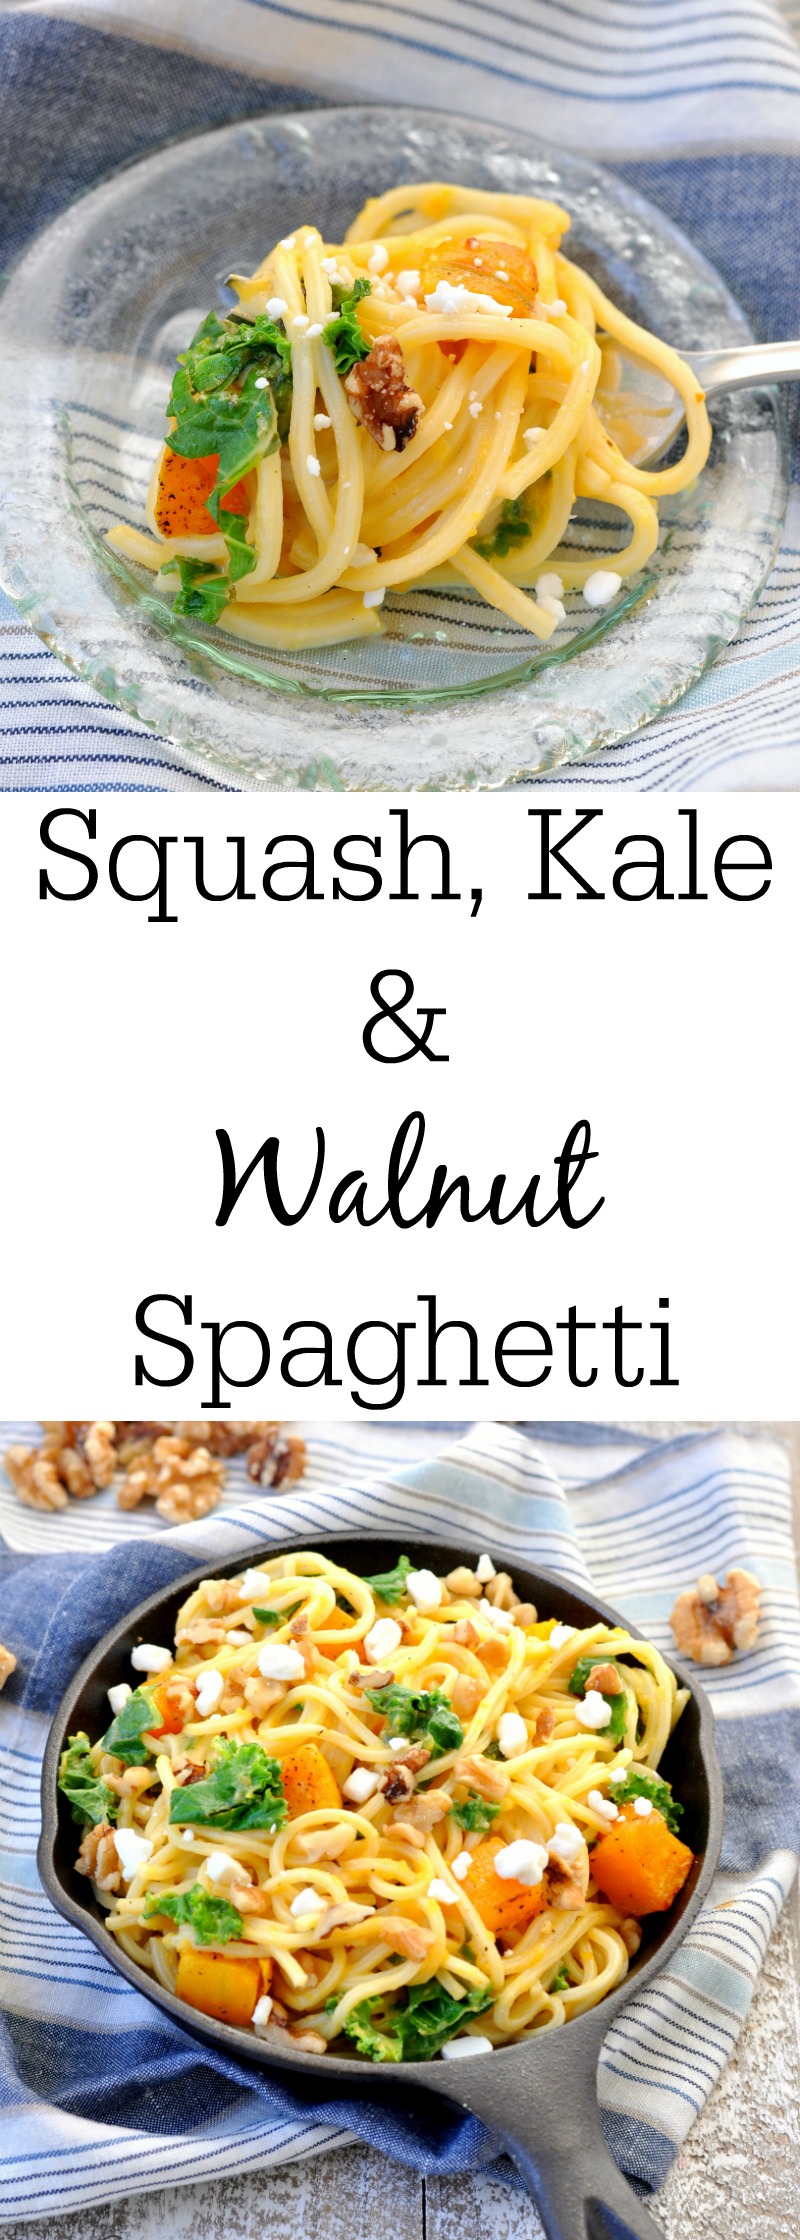 Butternut Squash, Kale and Walnut Spaghetti